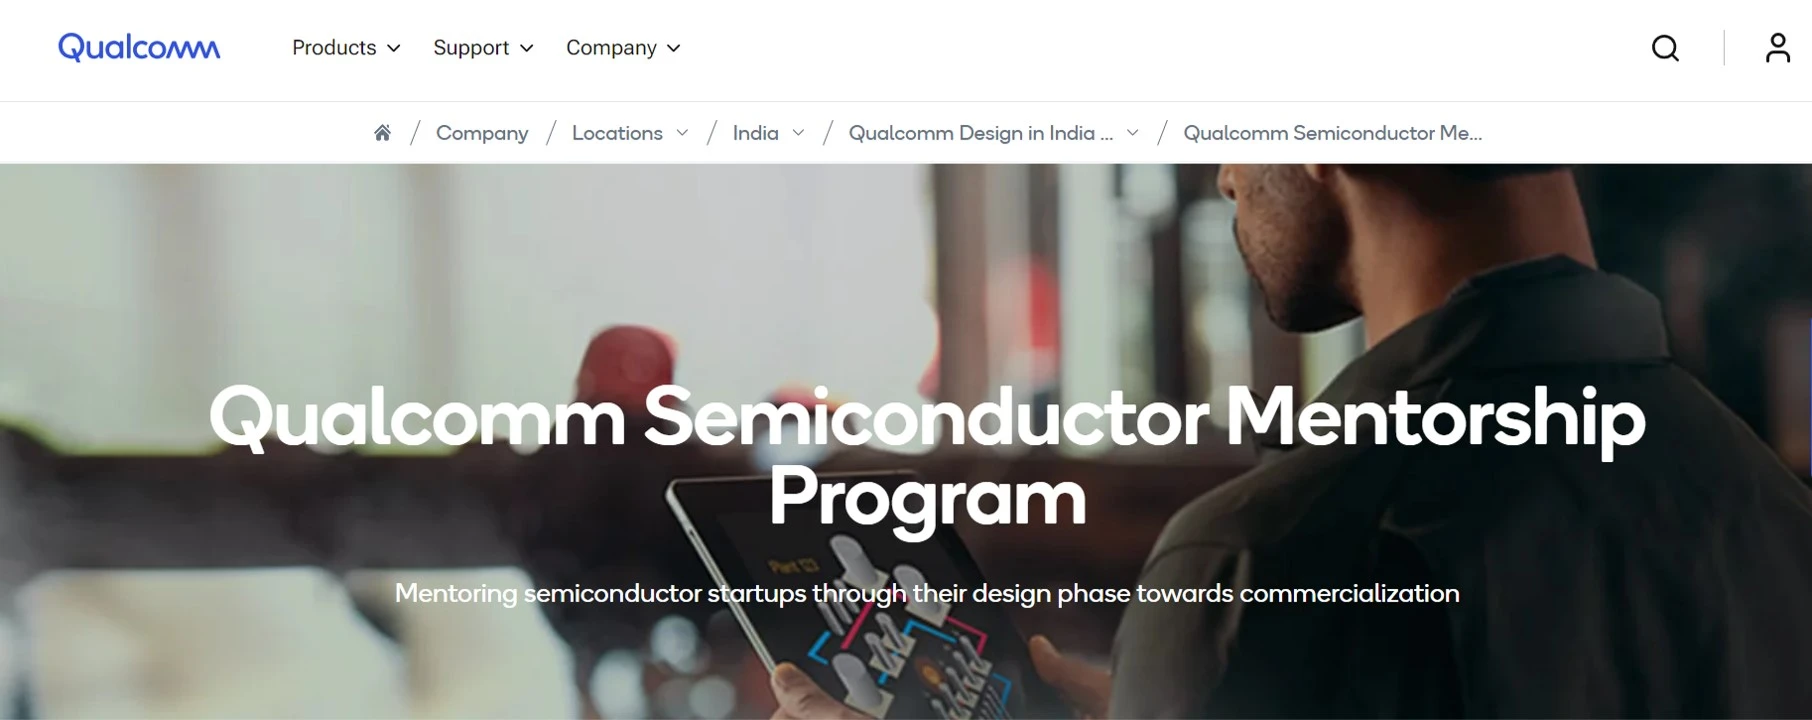 Qualcomm-Semiconductor-Mentorship-Program